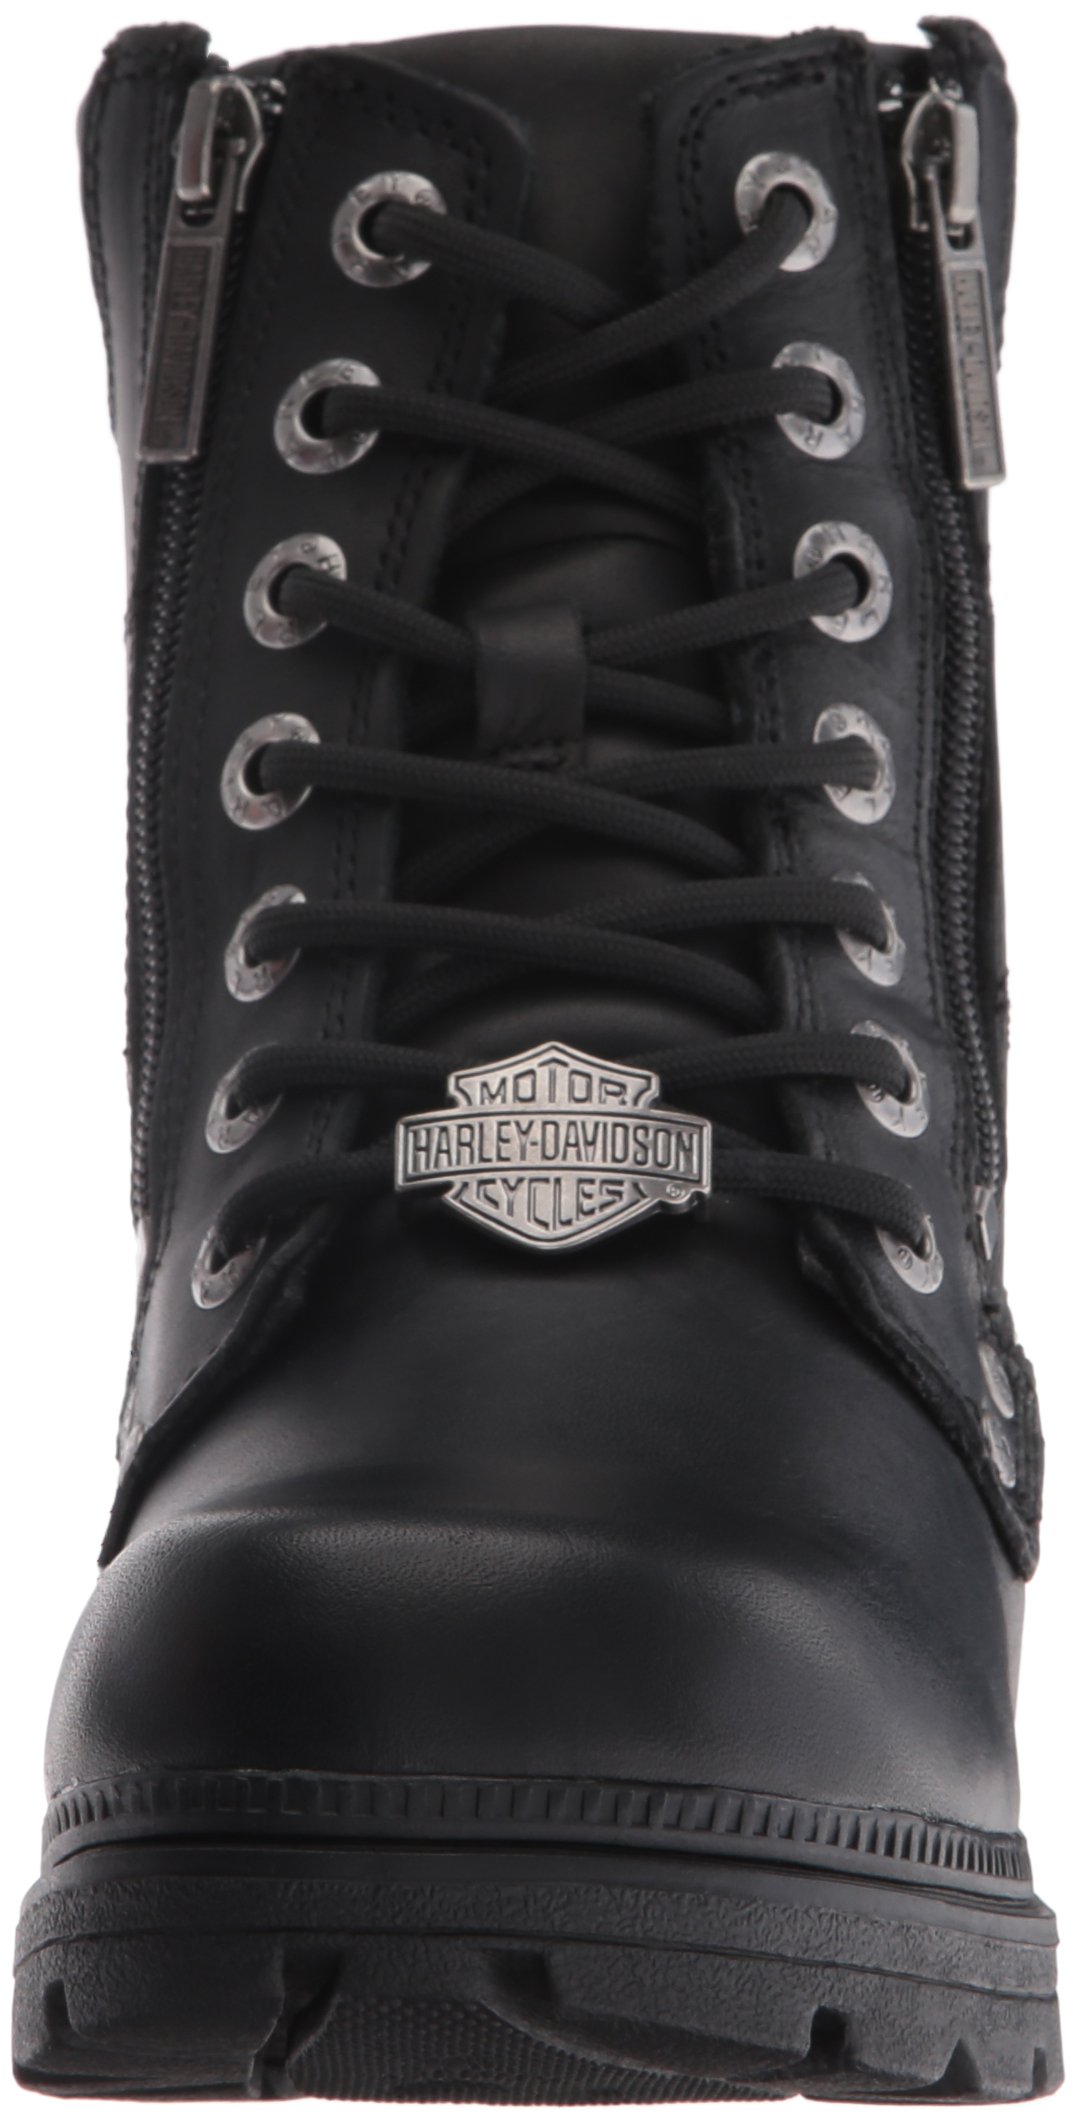 HARLEY-DAVIDSON FOOTWEAR Women's Inman Mills Boot